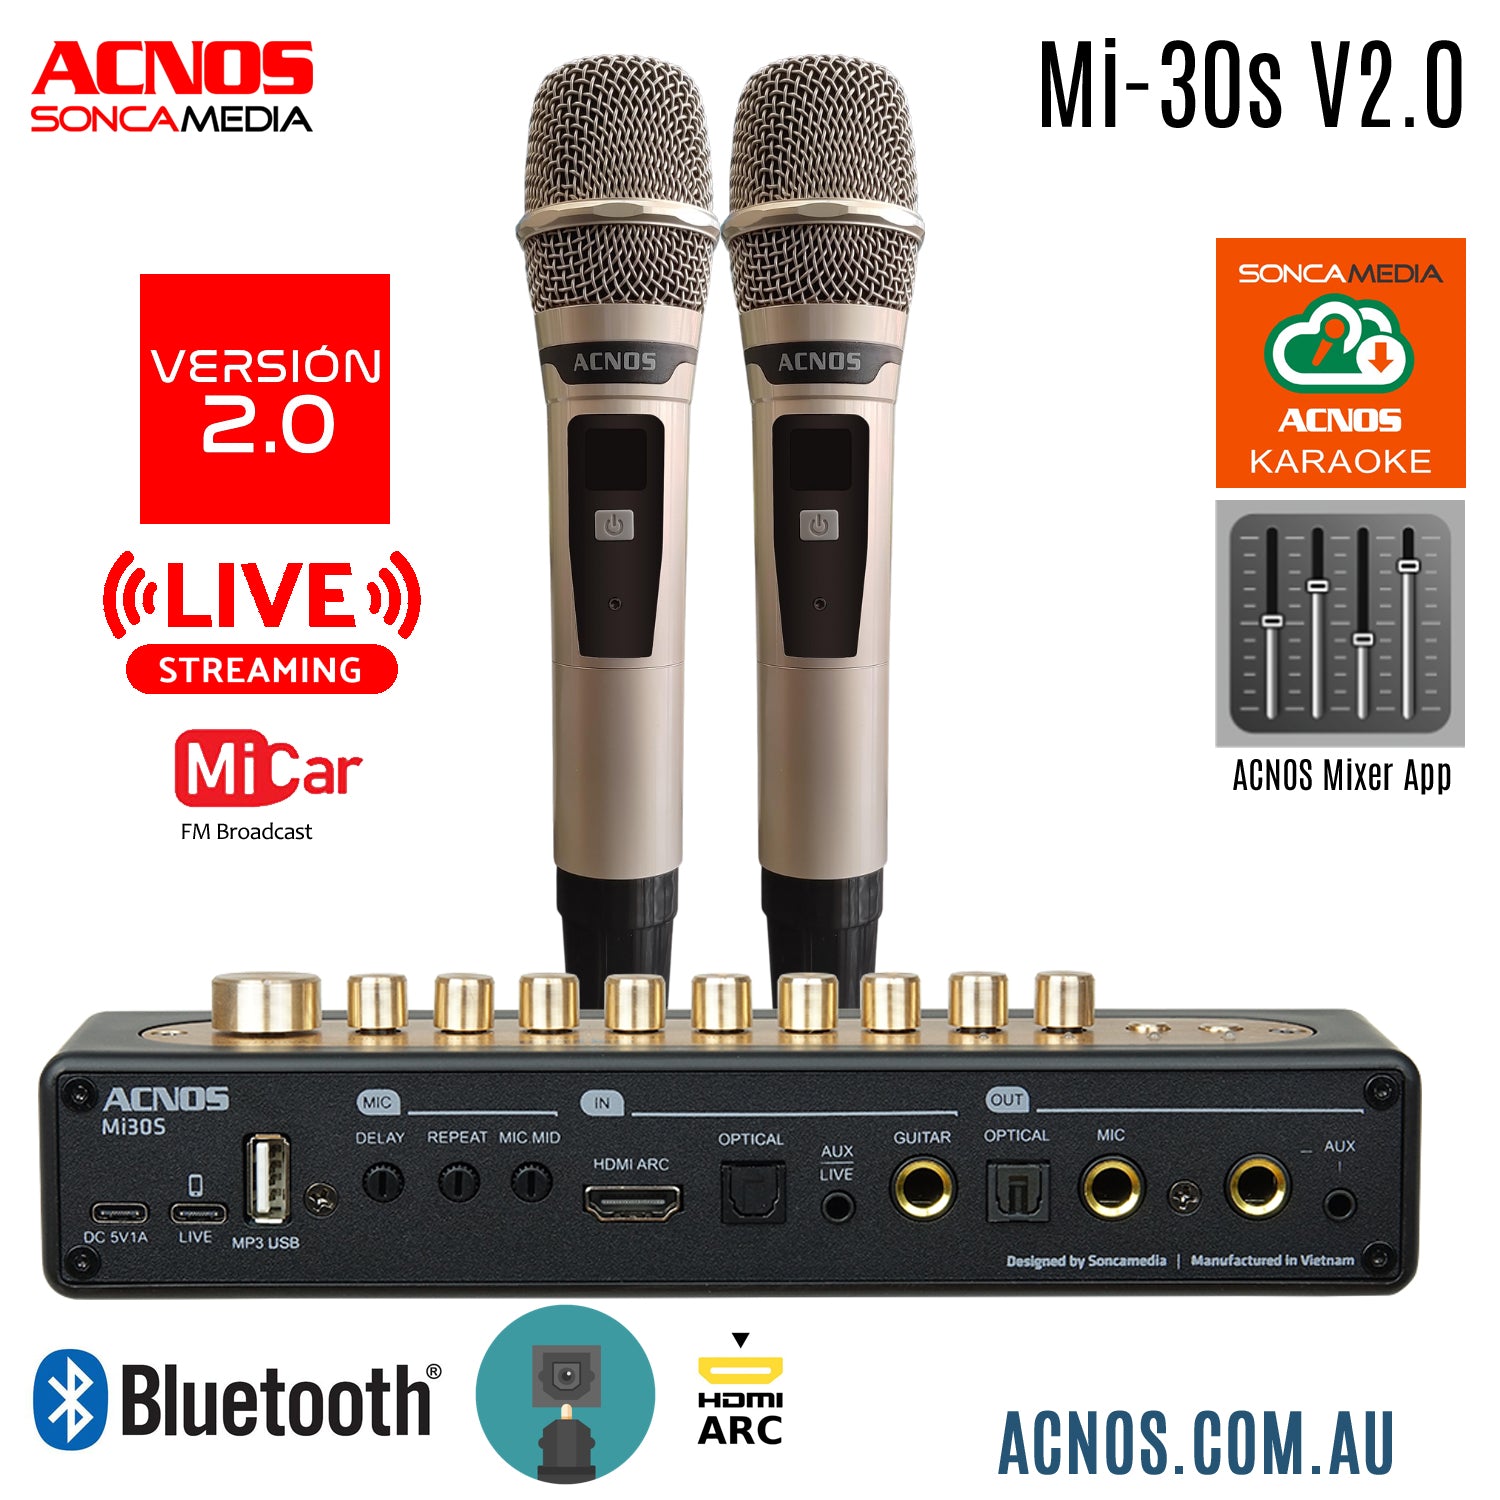 ACNOS Mi-30s (Version 2.0) Karaoke Mixer with UHF Wireless Mic's - Karaoke Home Entertainment